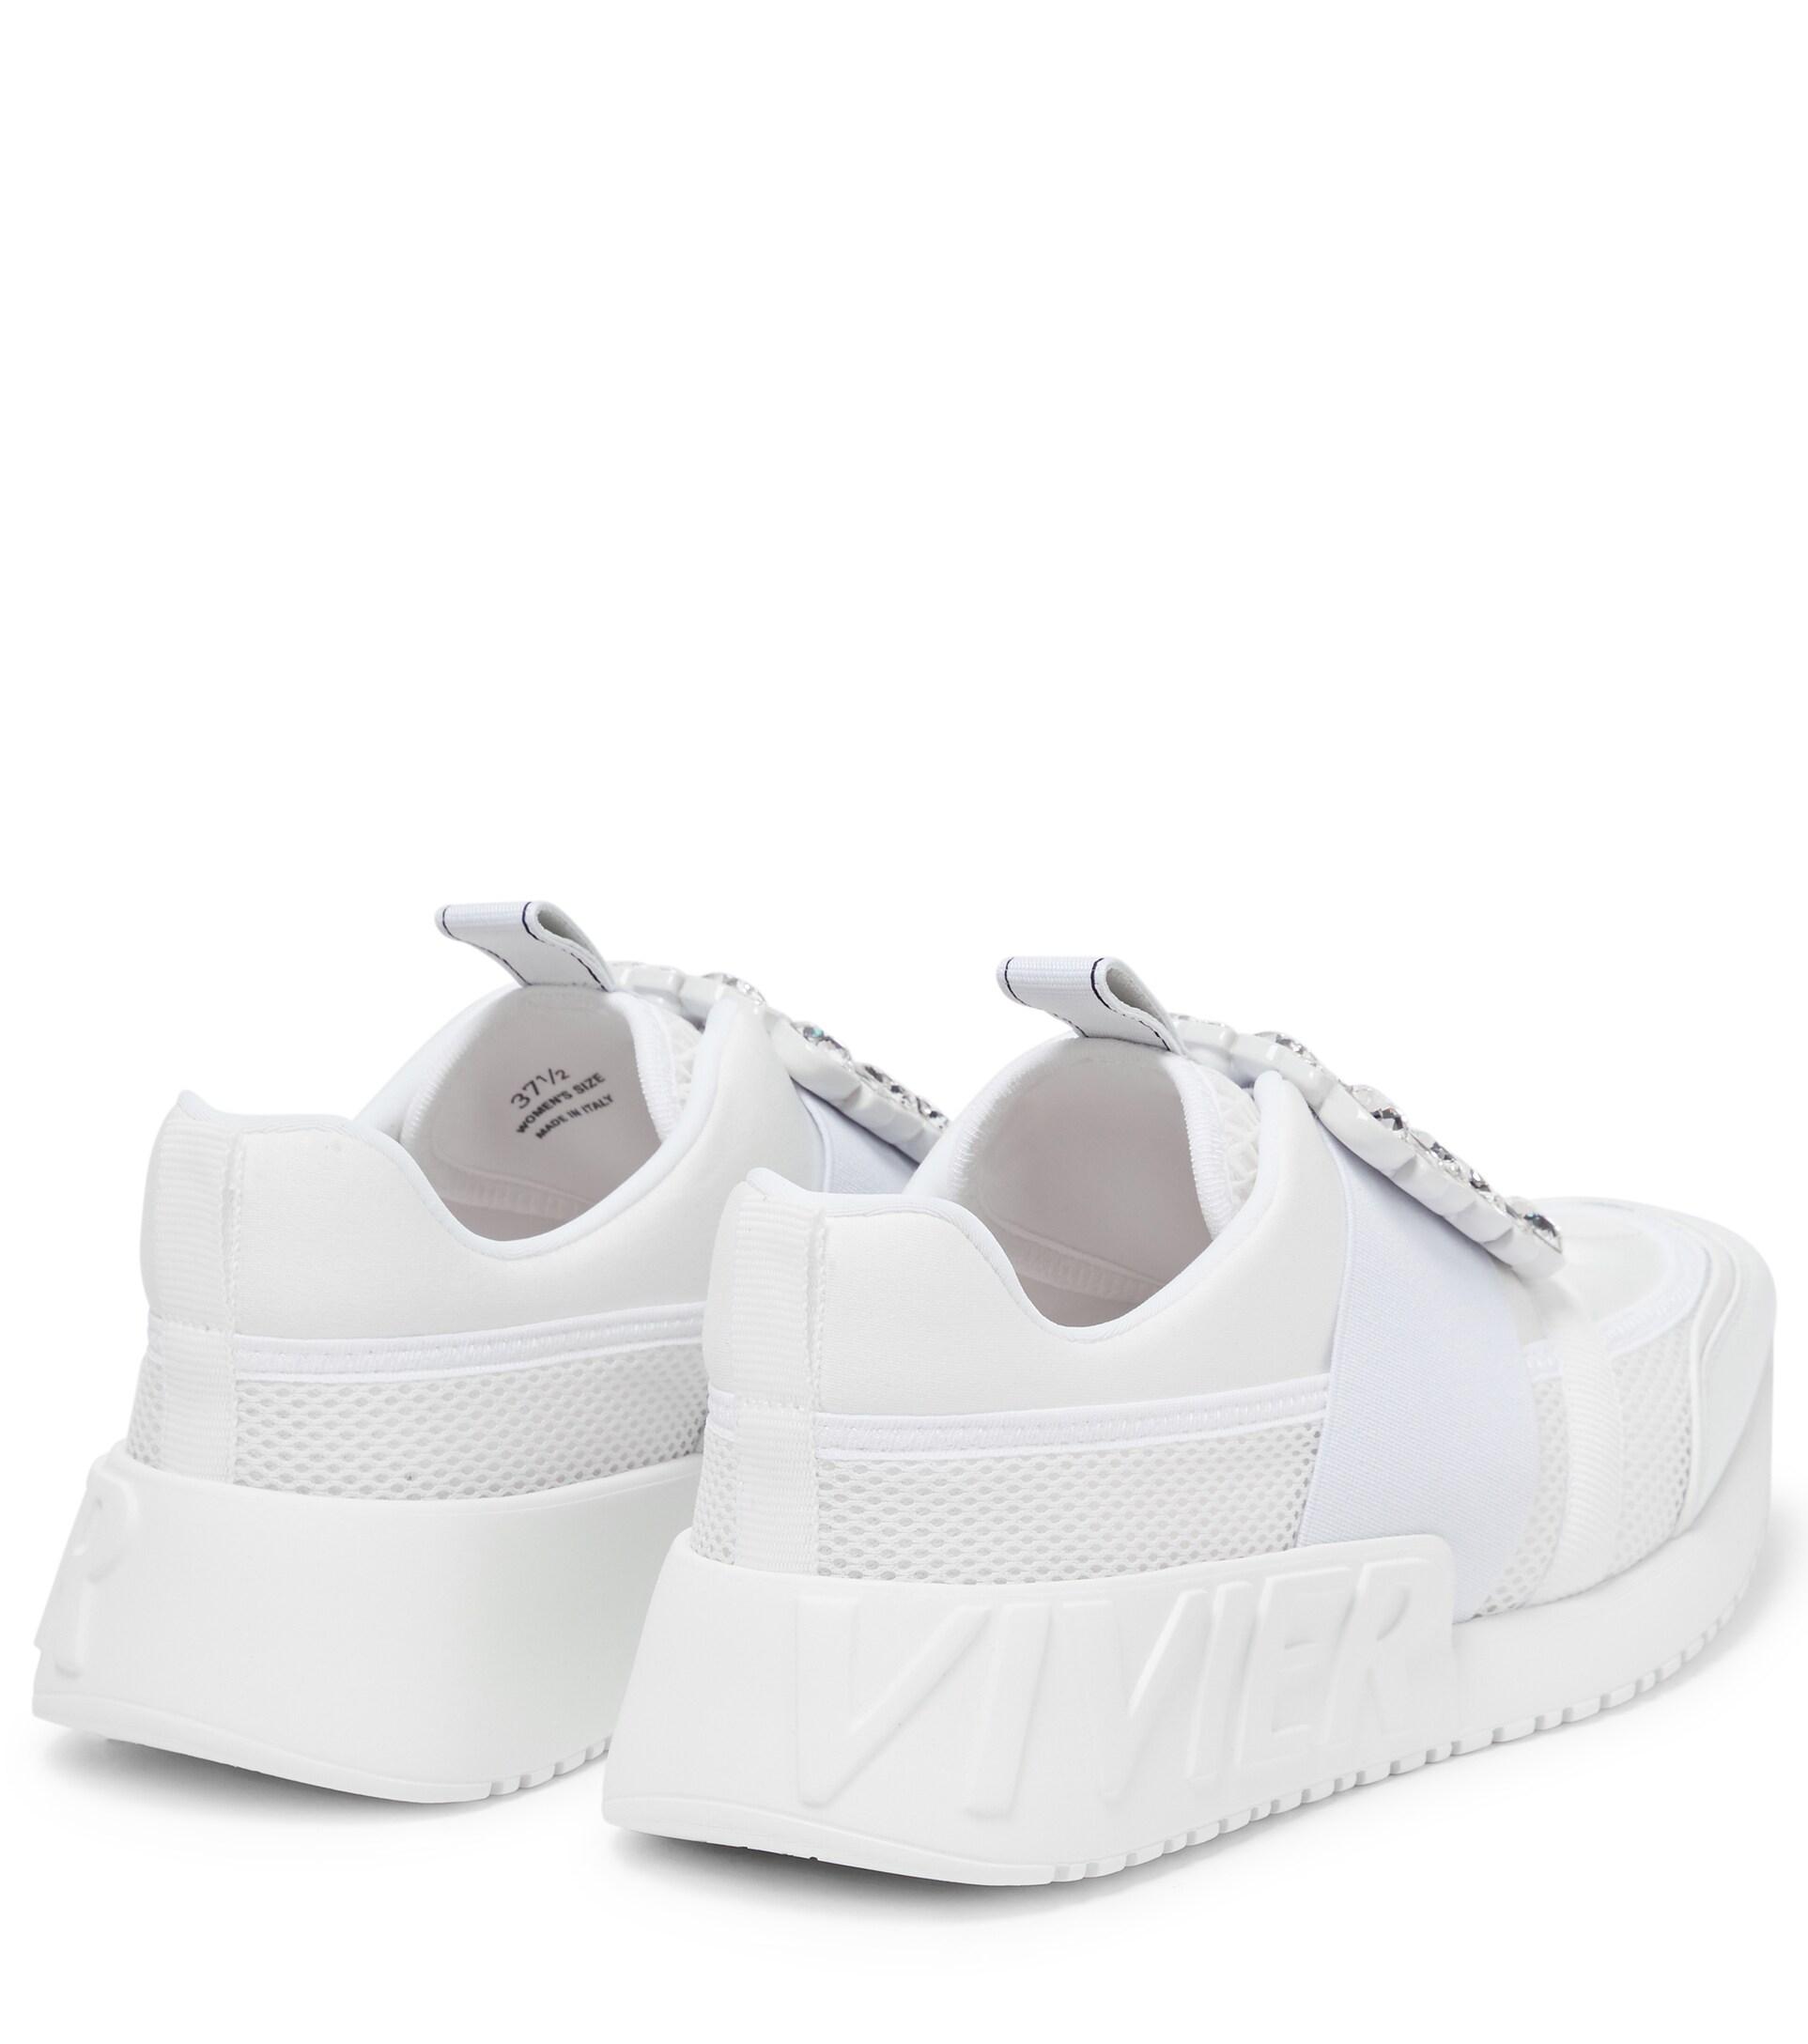 Roger Vivier Viv' Strass Buckle Sneakers in White | Lyst